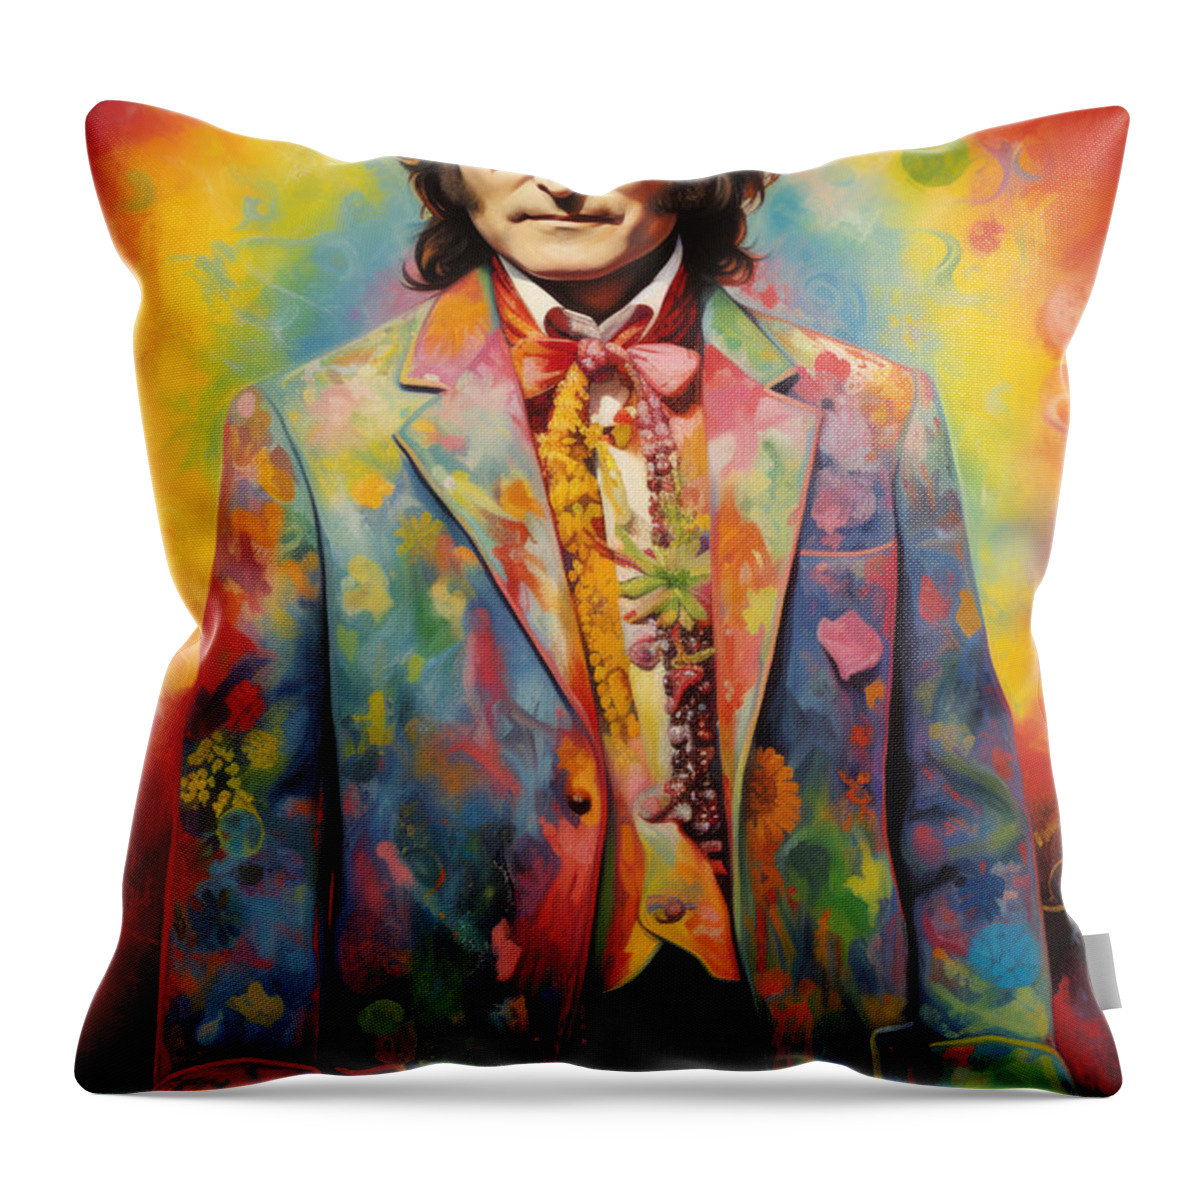 Flower Throw Pillow featuring the painting John Lennon Pop Art by My Head Cinema